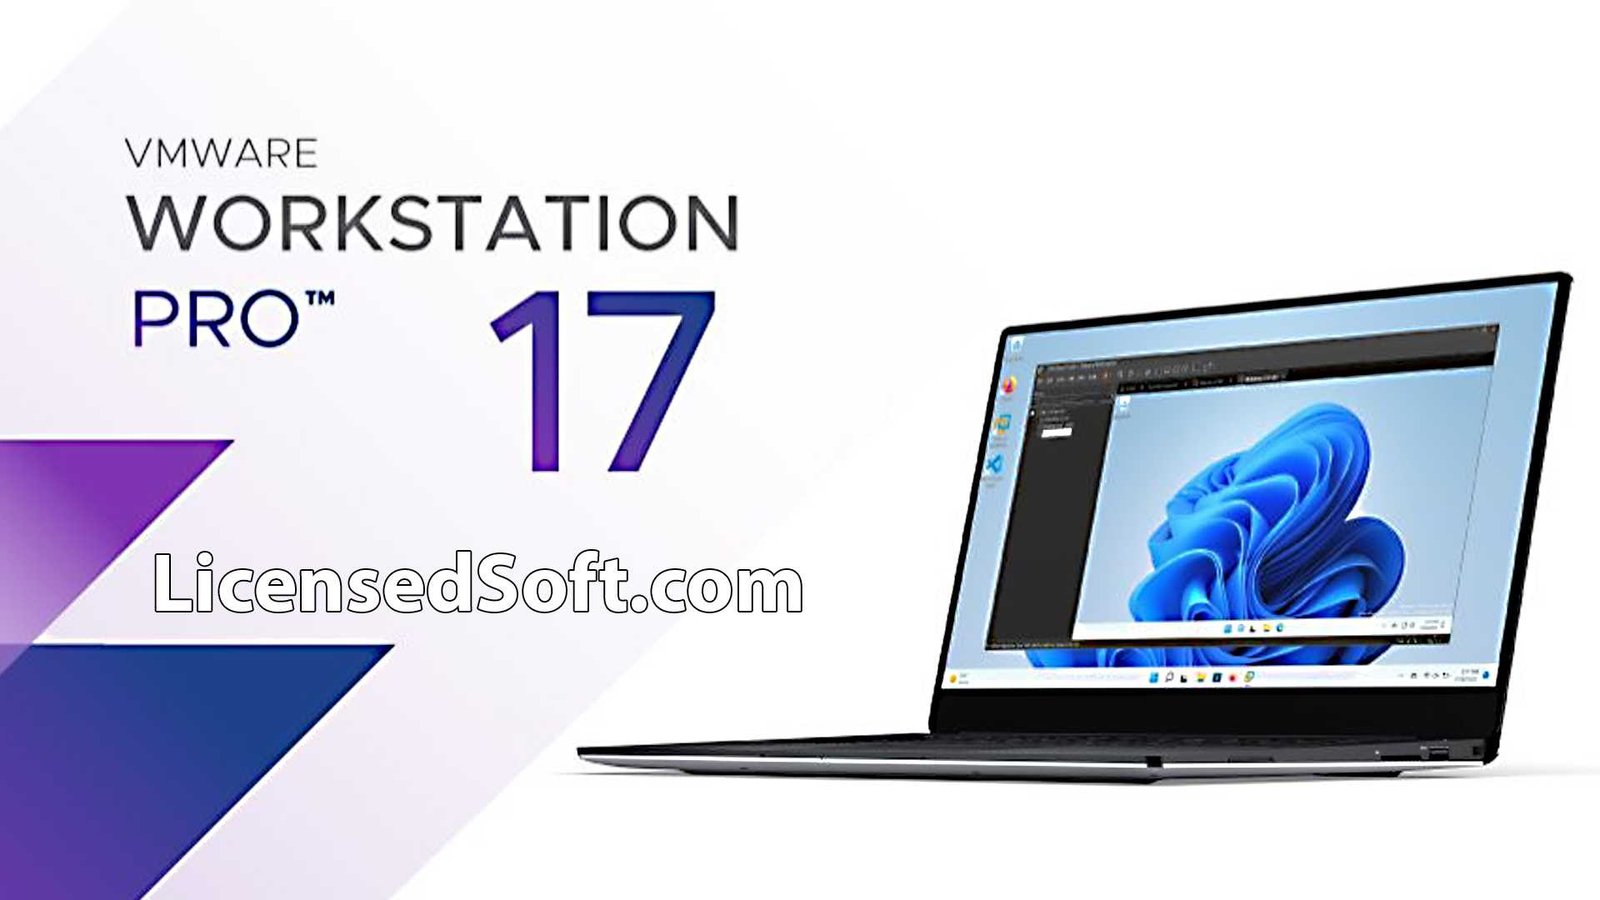 VMware Workstation Pro 17.0.2 Full Cover Image By LicensedSoft